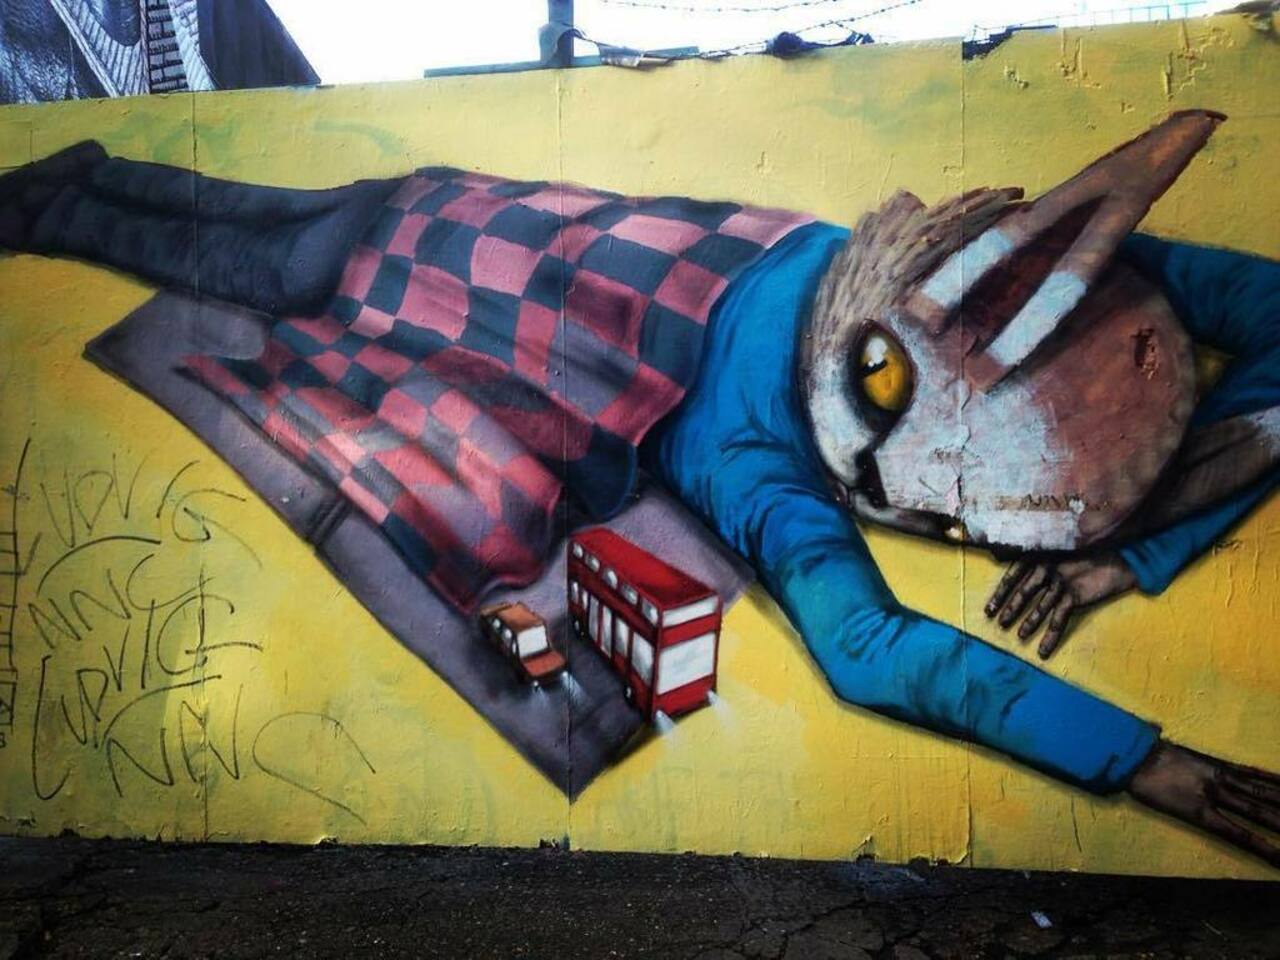 #streetart #streetartlondon #londonstreetart #urbanart #graffiti #camden by syszygy http://t.co/GkLyxfMBJP